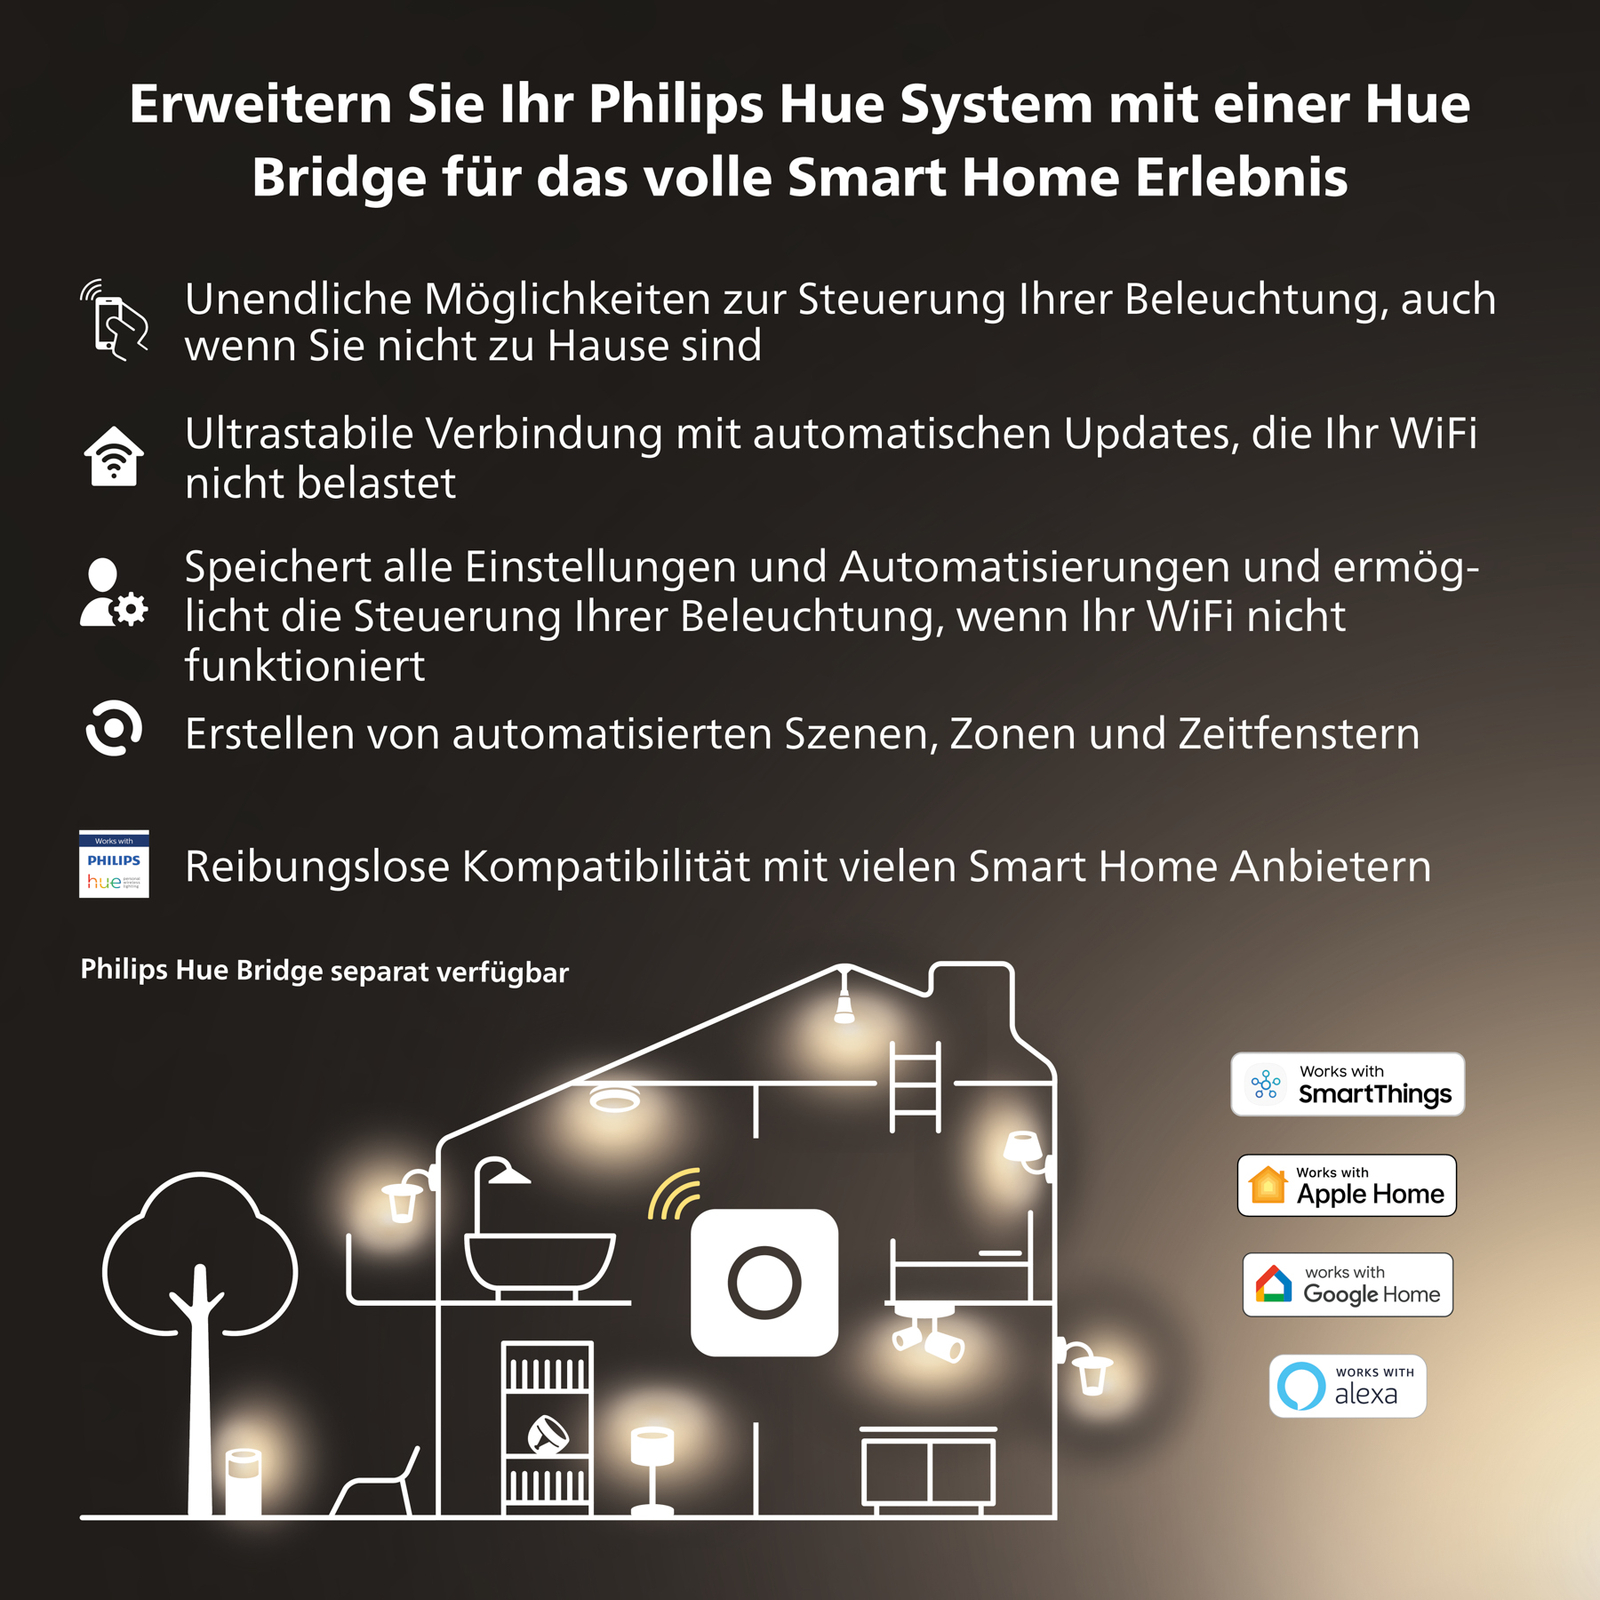 Philips Hue White Ambiance E27 8W LED lamp, per 2